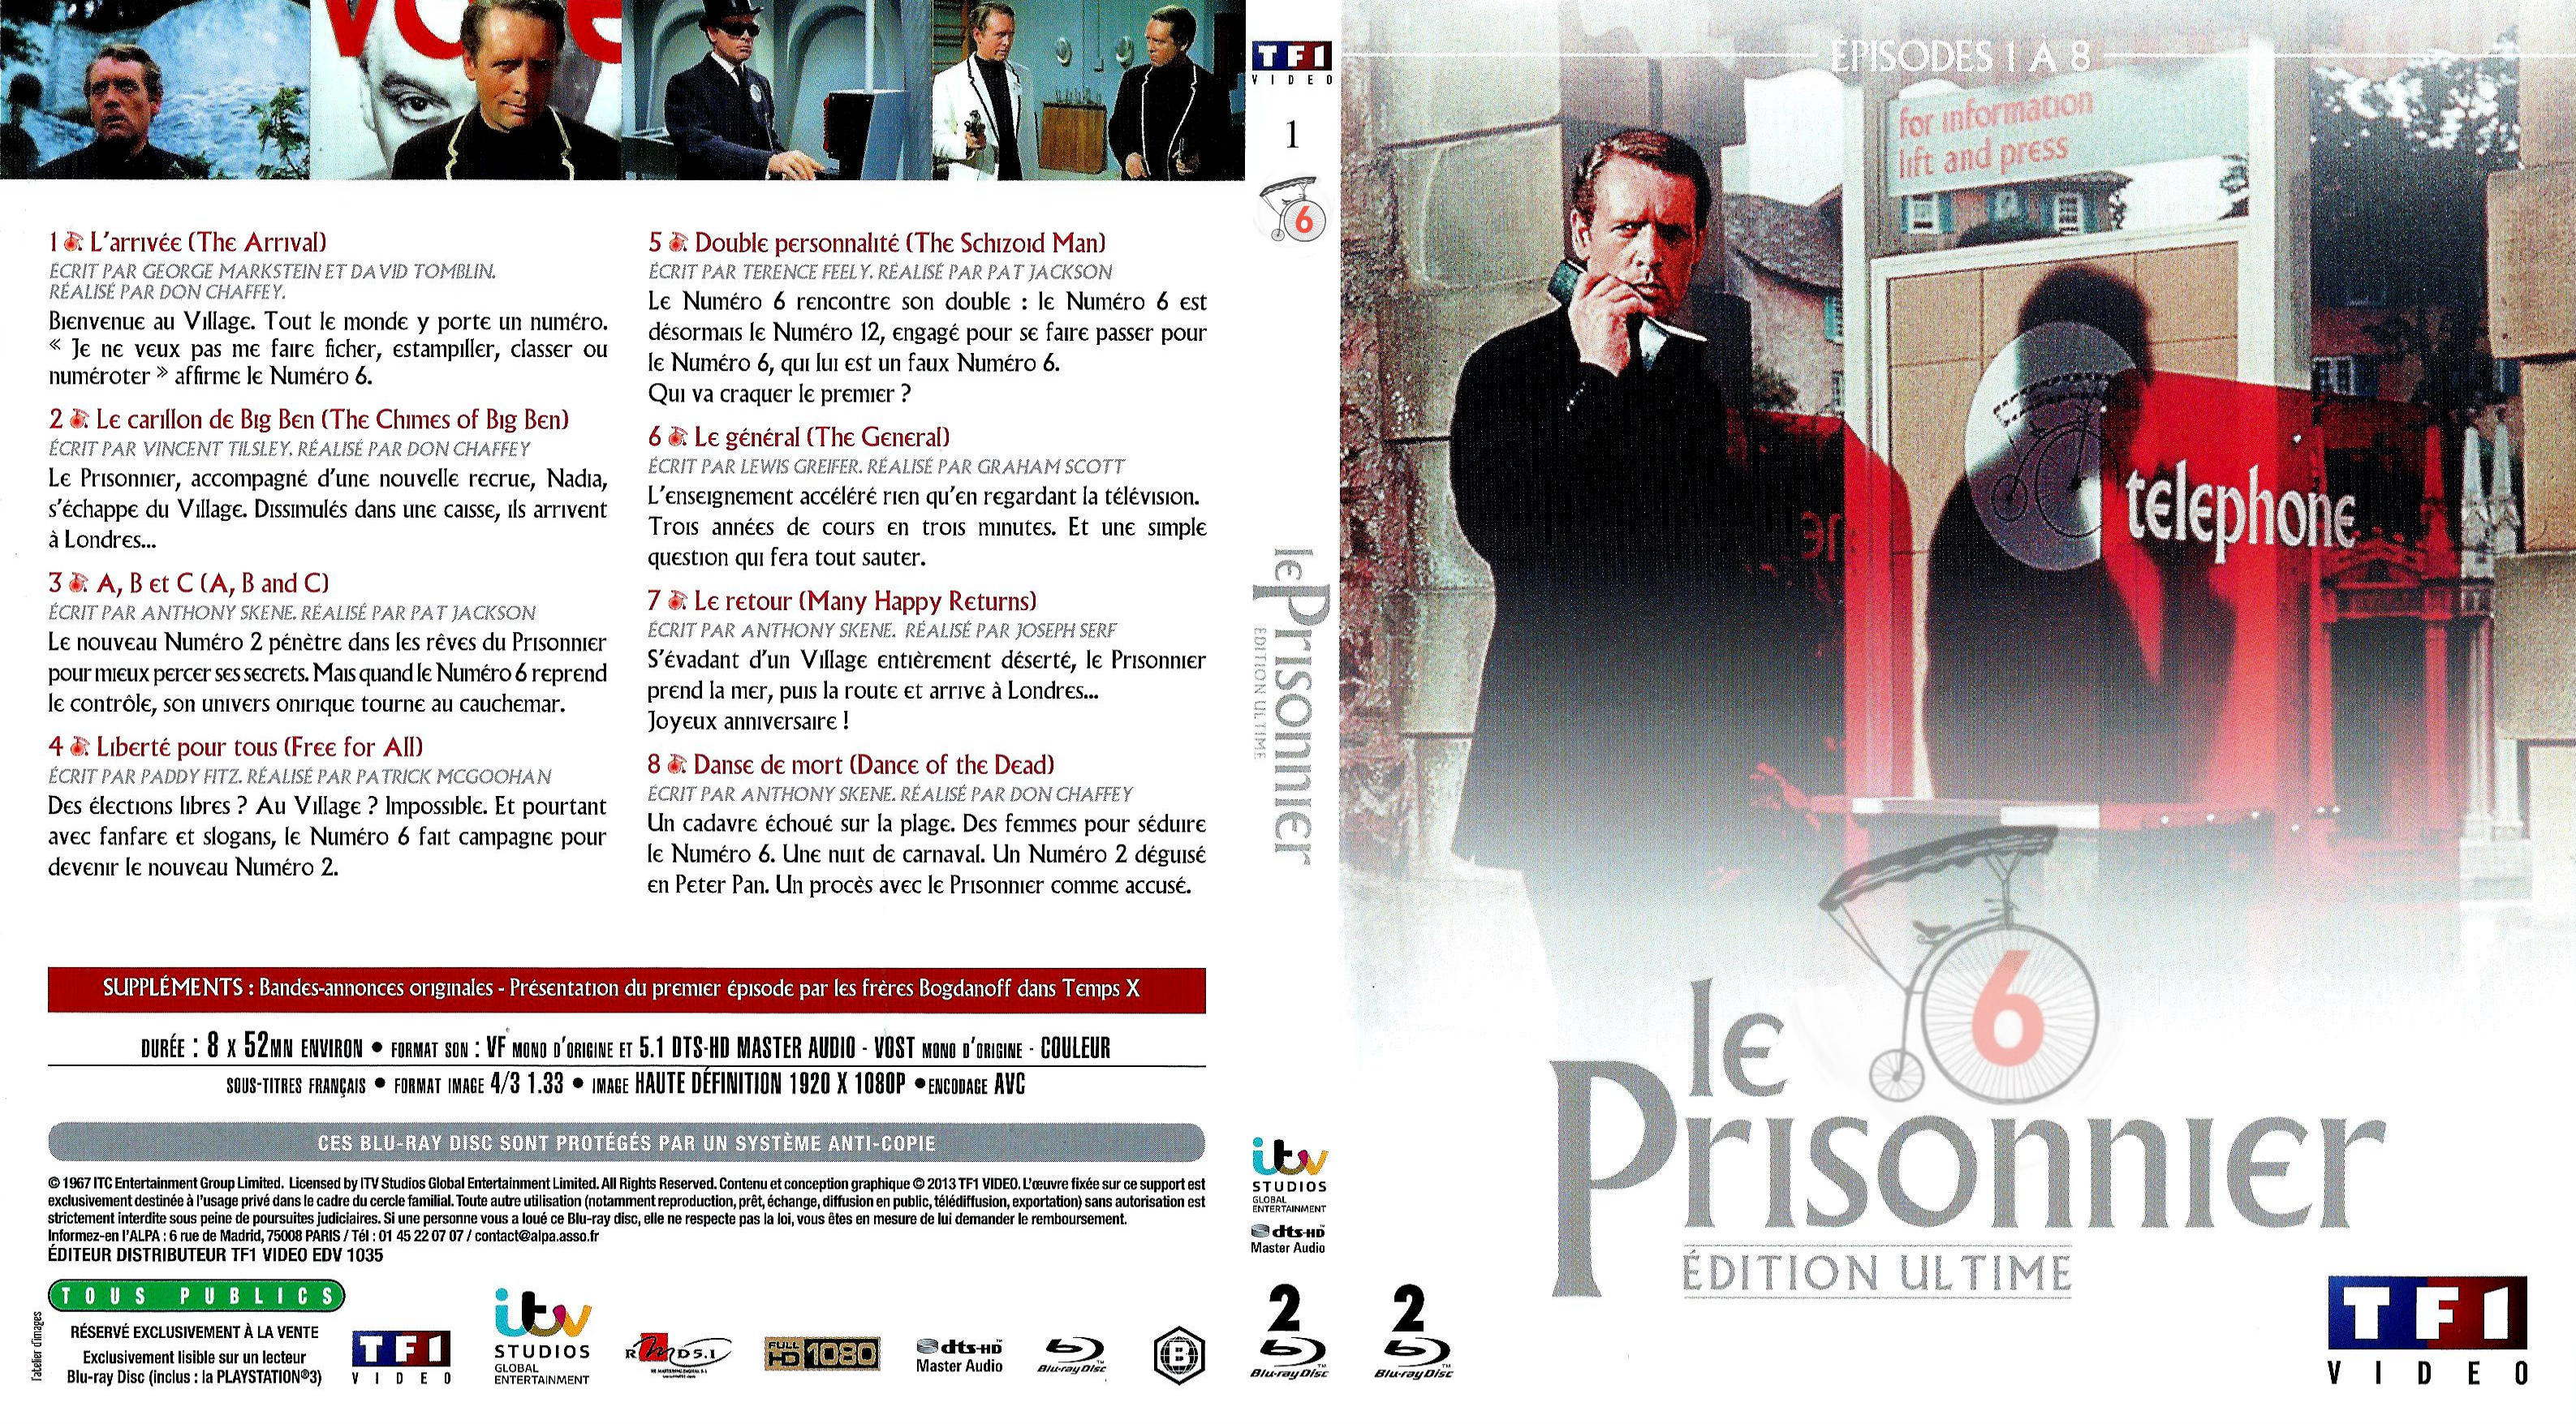 Jaquette DVD Le prisonnier volume 1 (BLU-RAY)